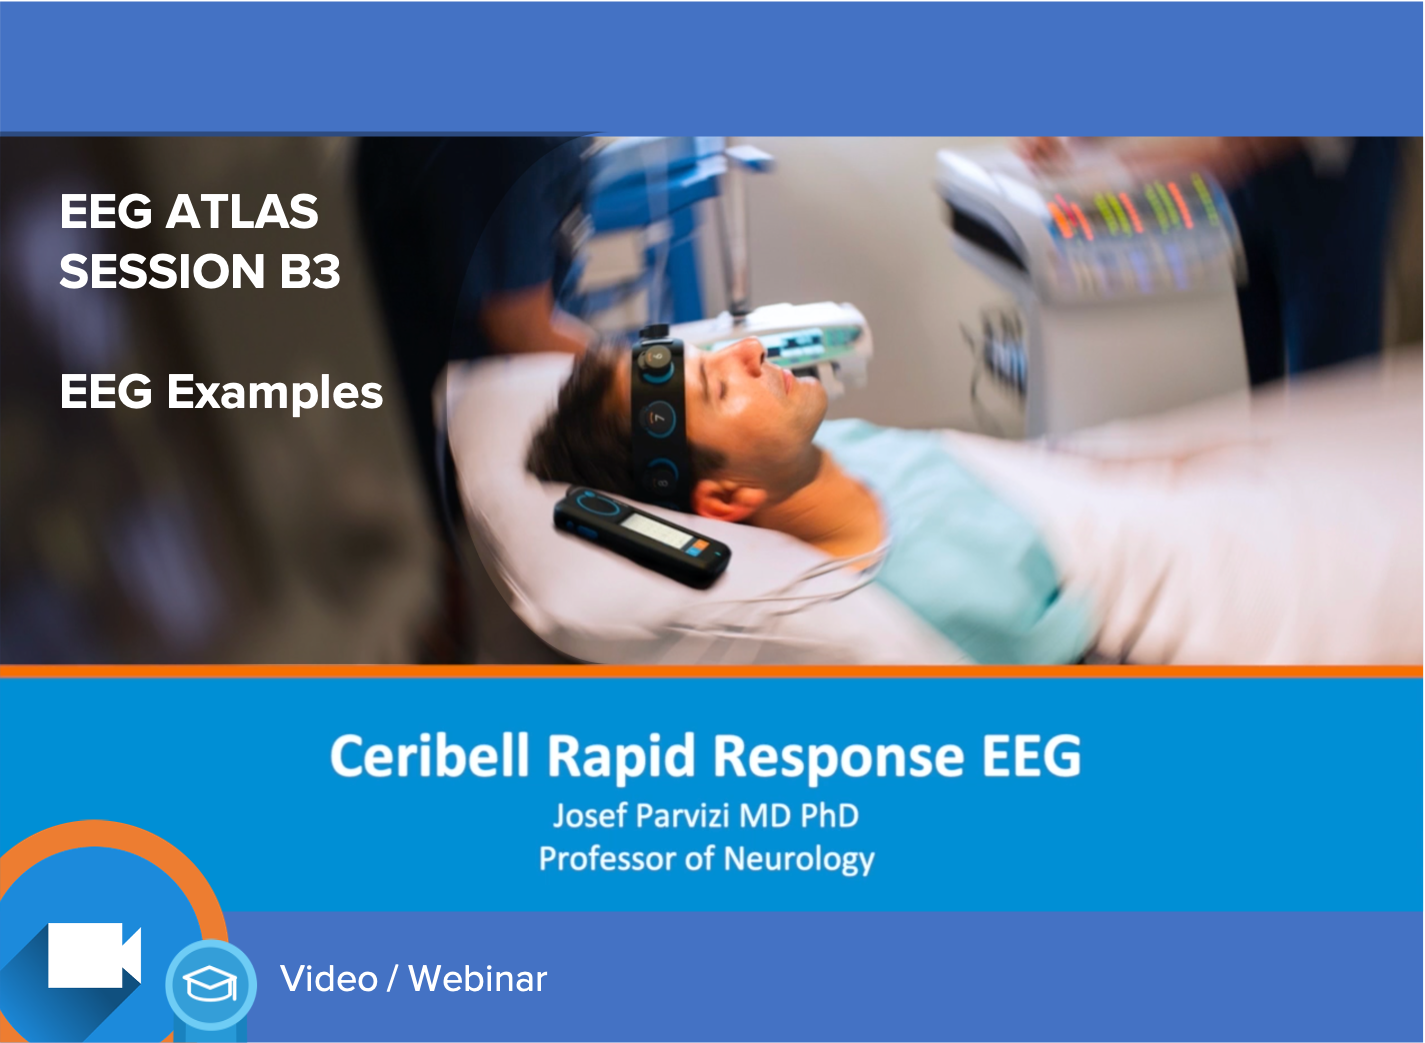 EEG Atlas B3: Understand EEG Through Examples With The Ceribell Rapid Response System